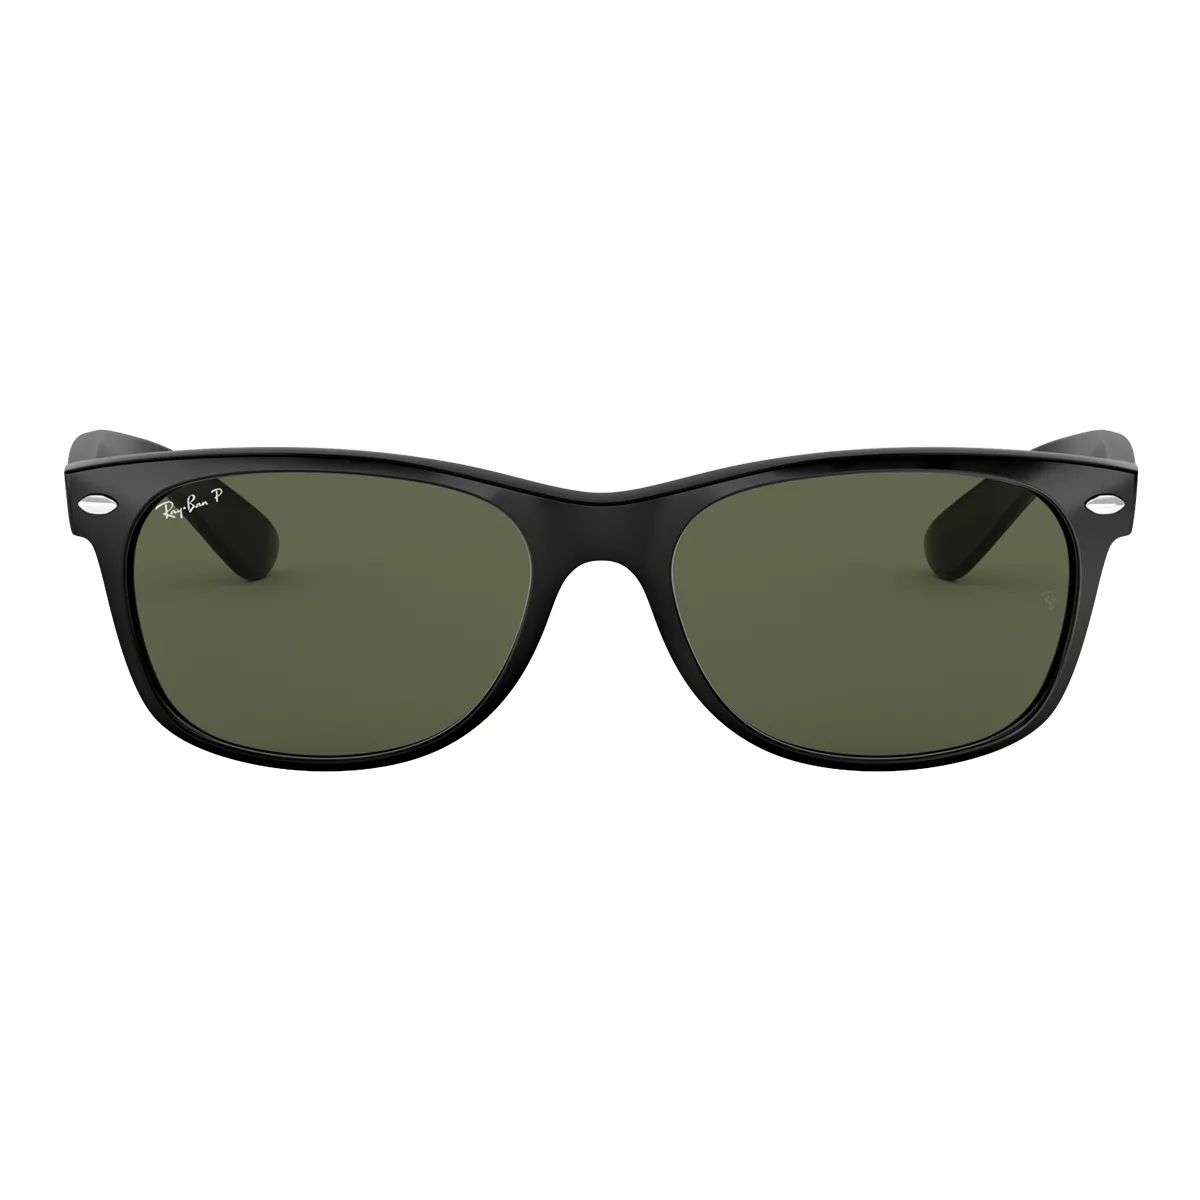 Ray Ban Men's/Women's New Wayfarer Sunglasses, Polarized